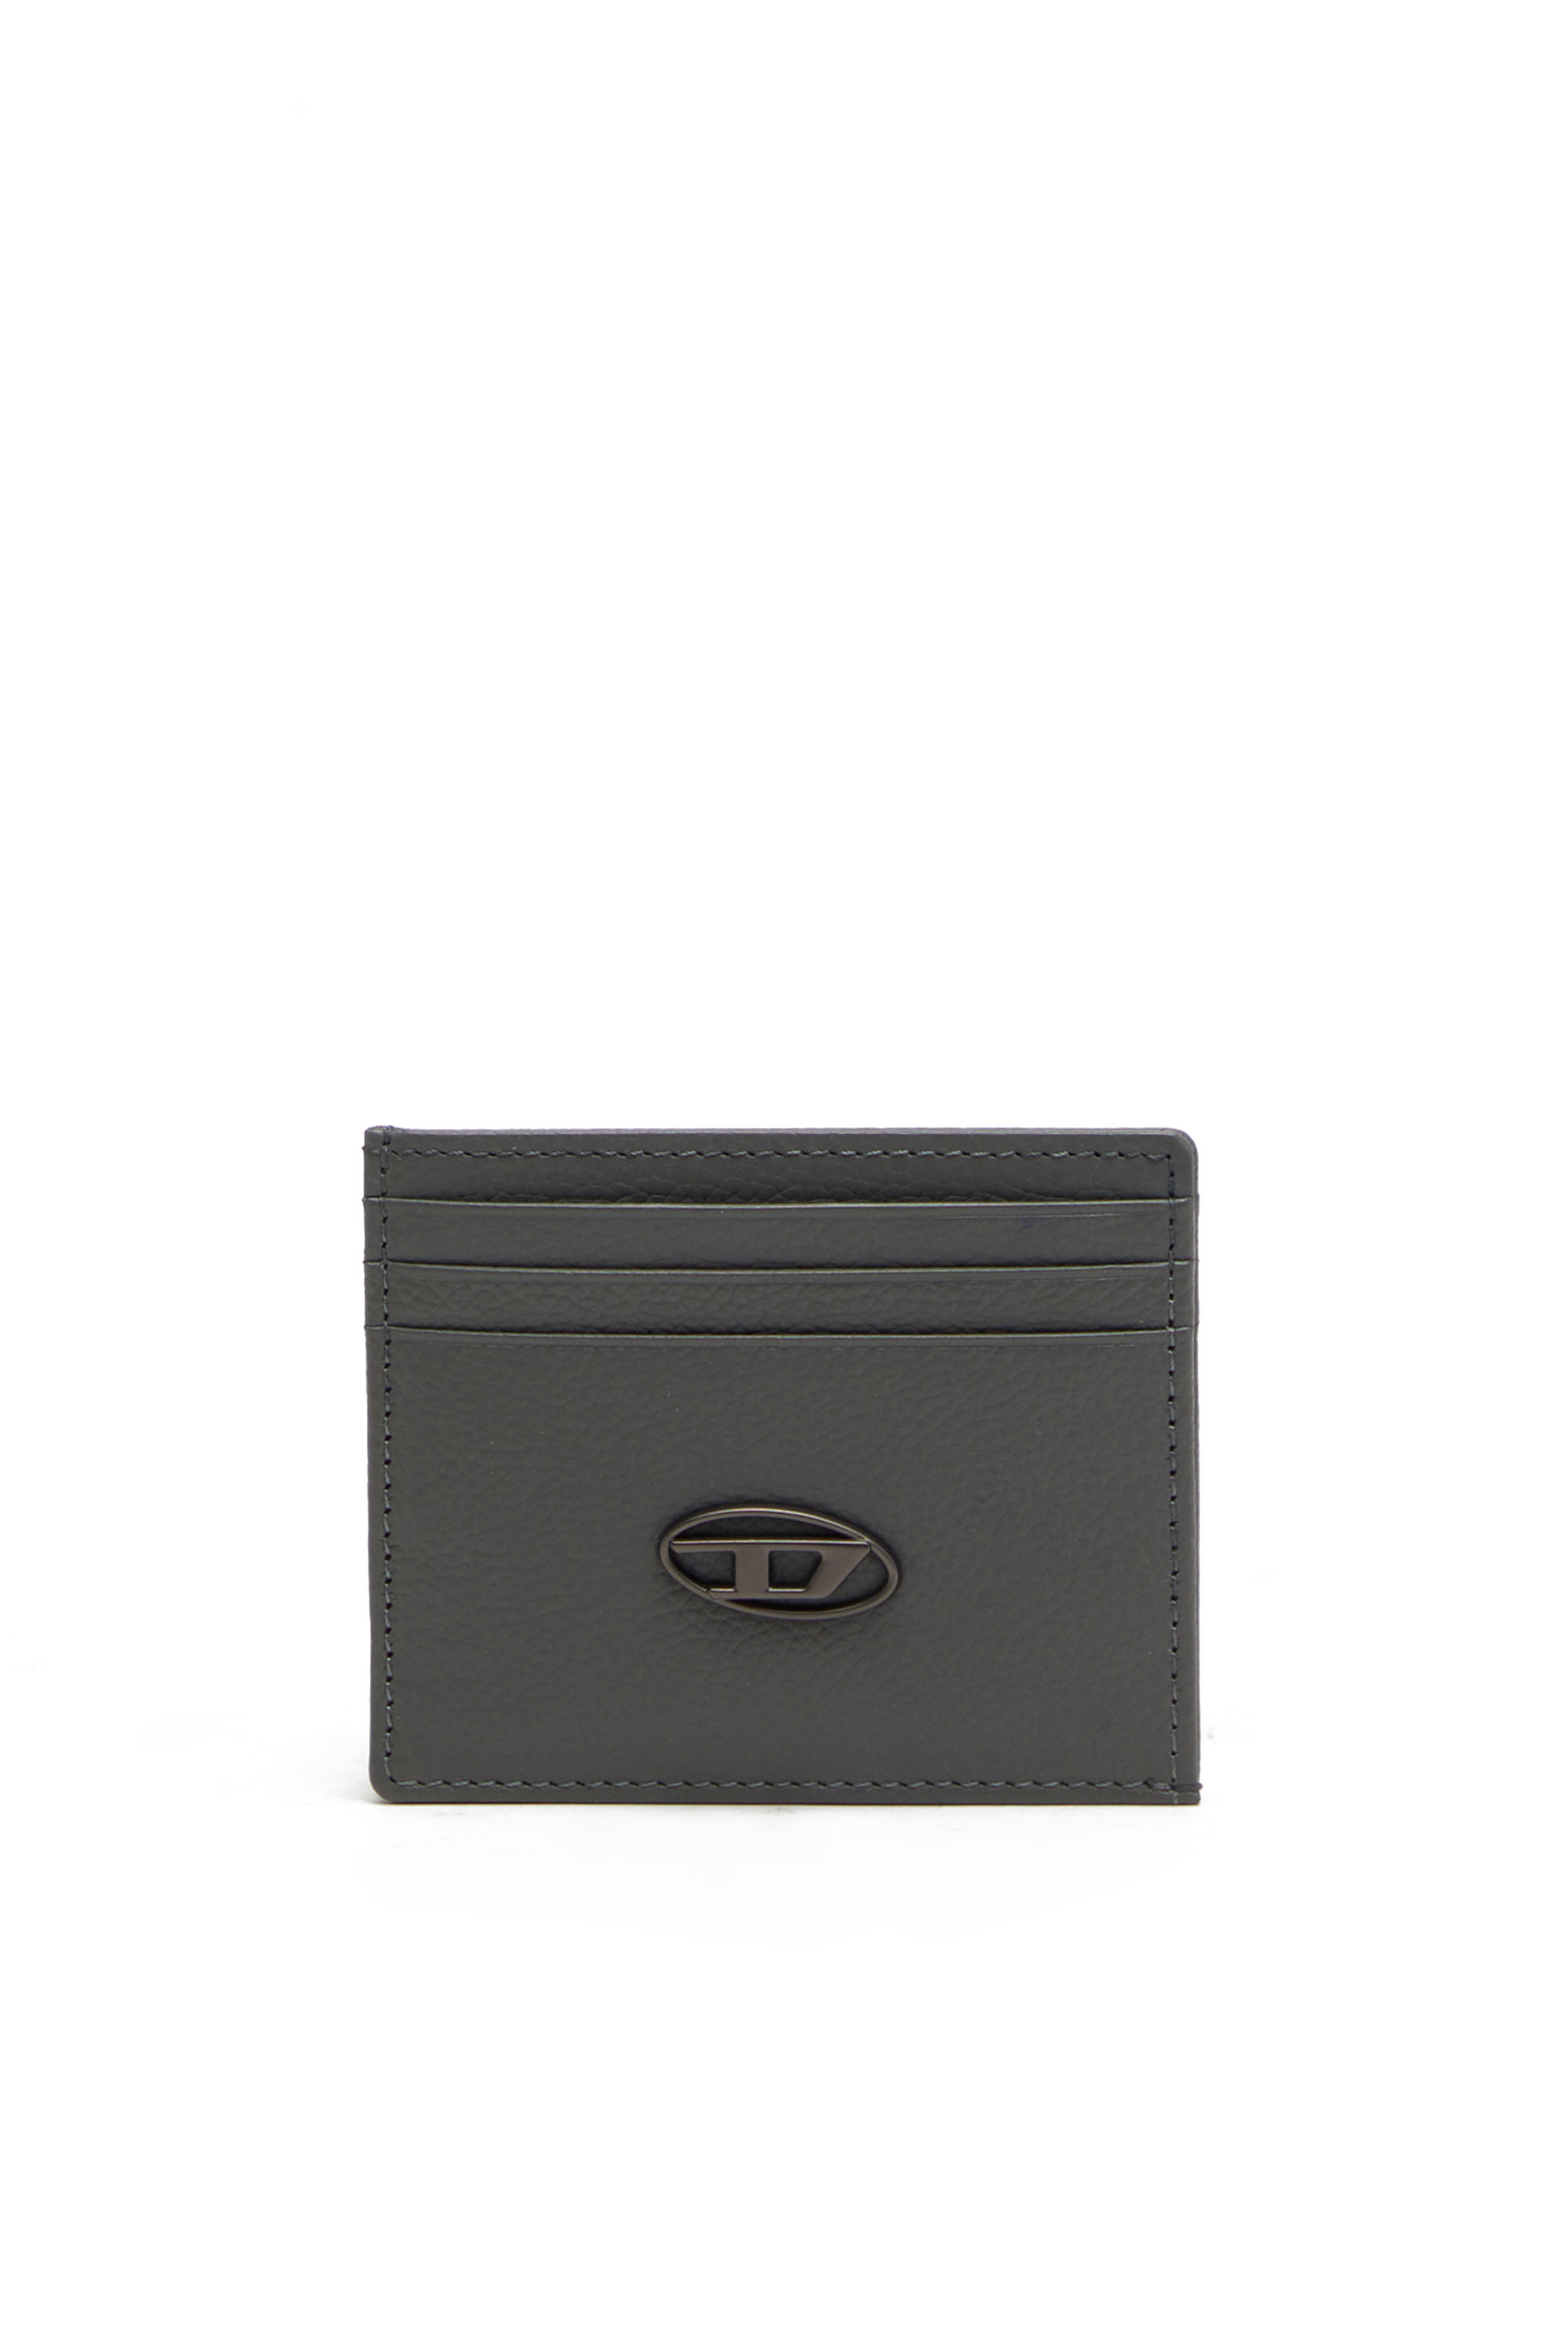 Diesel - CARD CASE, Dark grey - Image 1